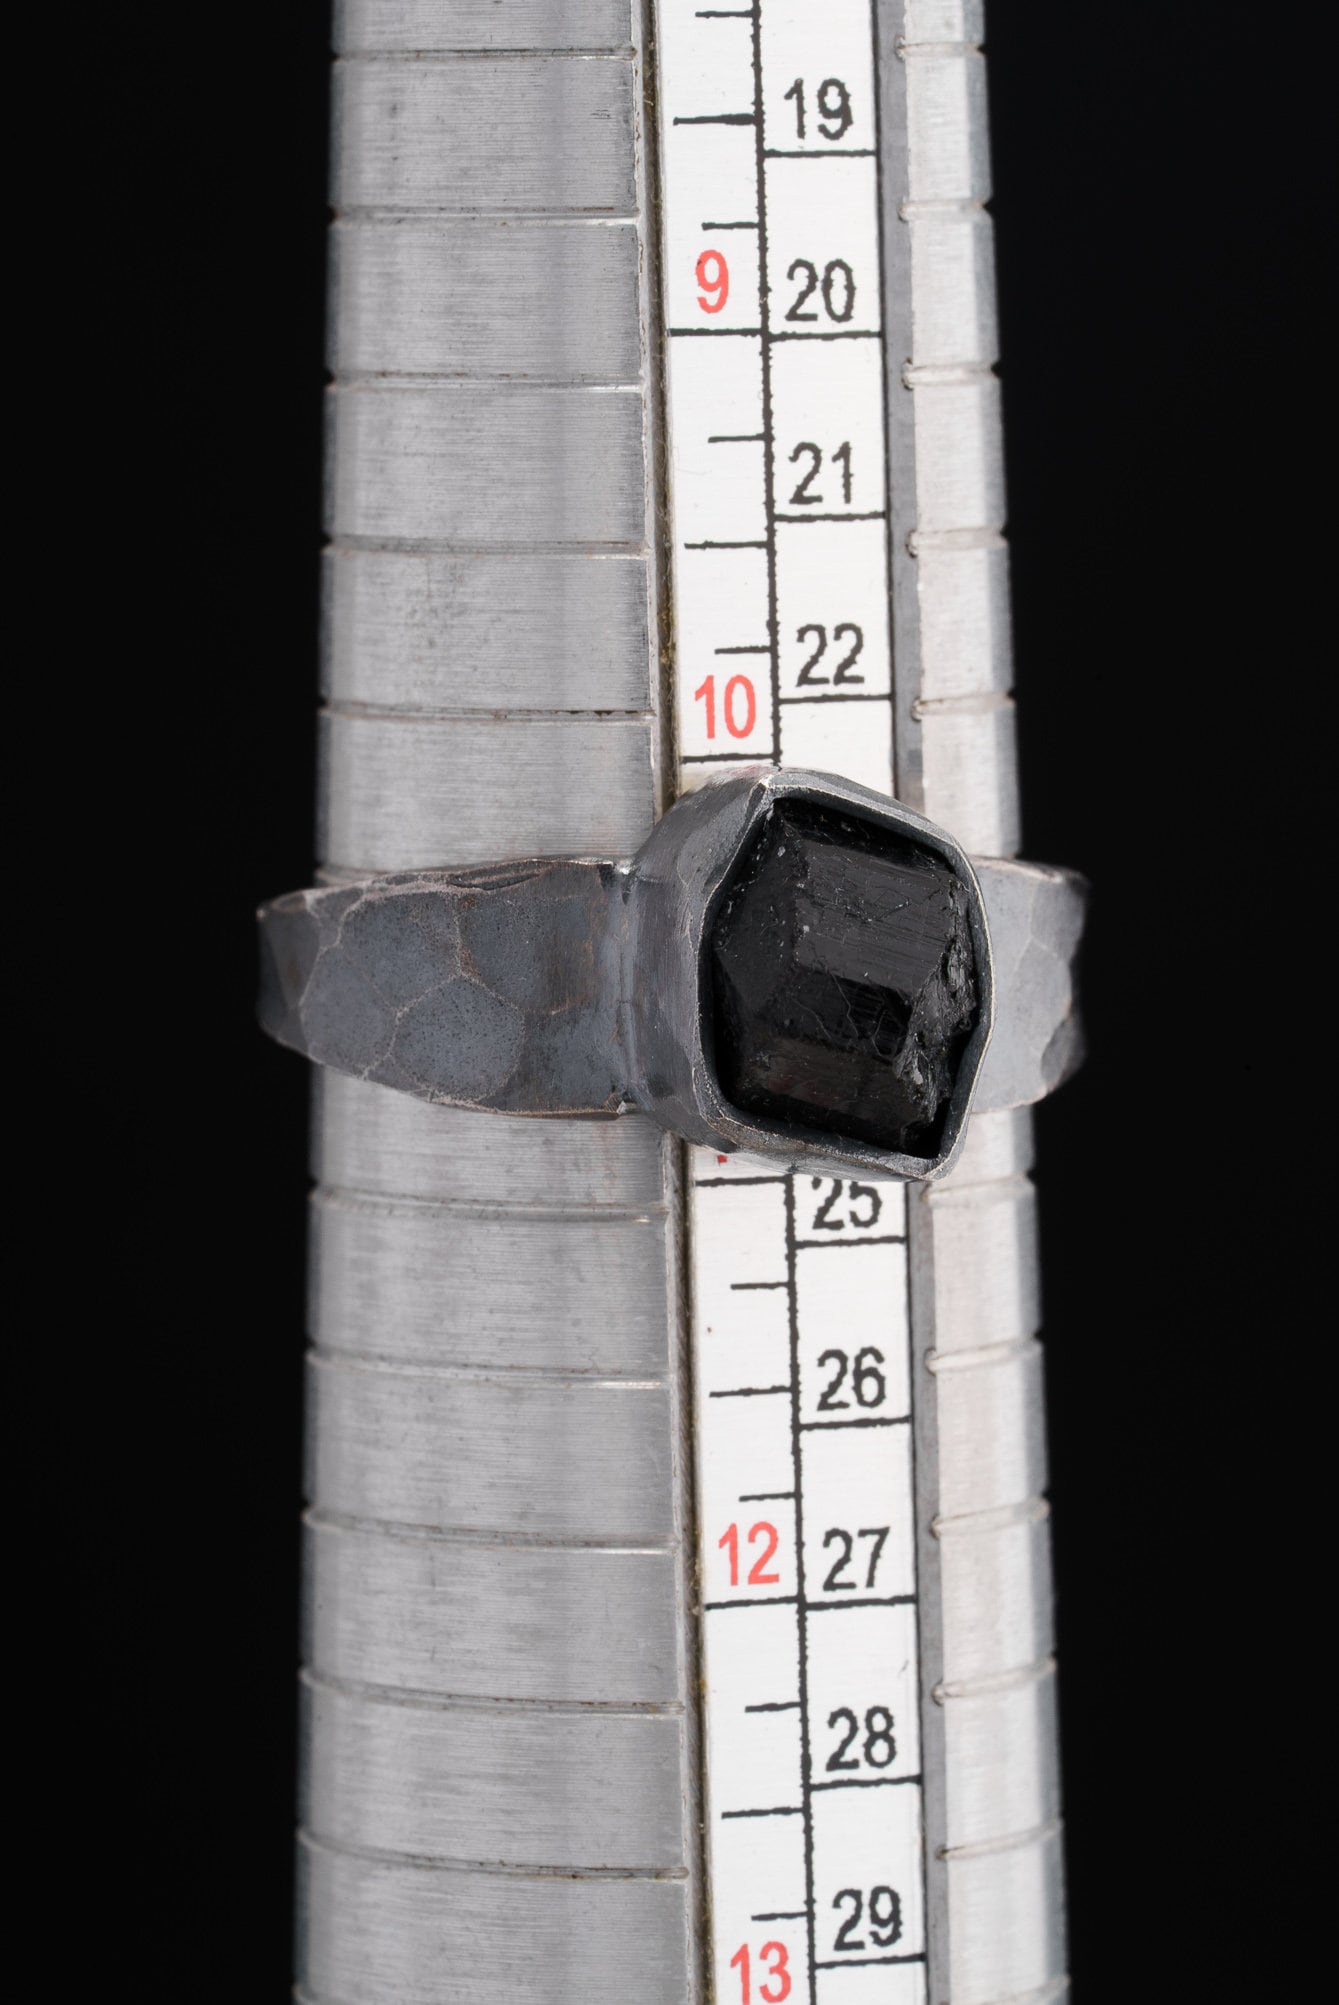 Raw Australian Tourmaline - Unisex / Men - Large Crystal Ring - Size 10 1/2 US - 925 Sterling Silver - Hammer Textured & Oxidised